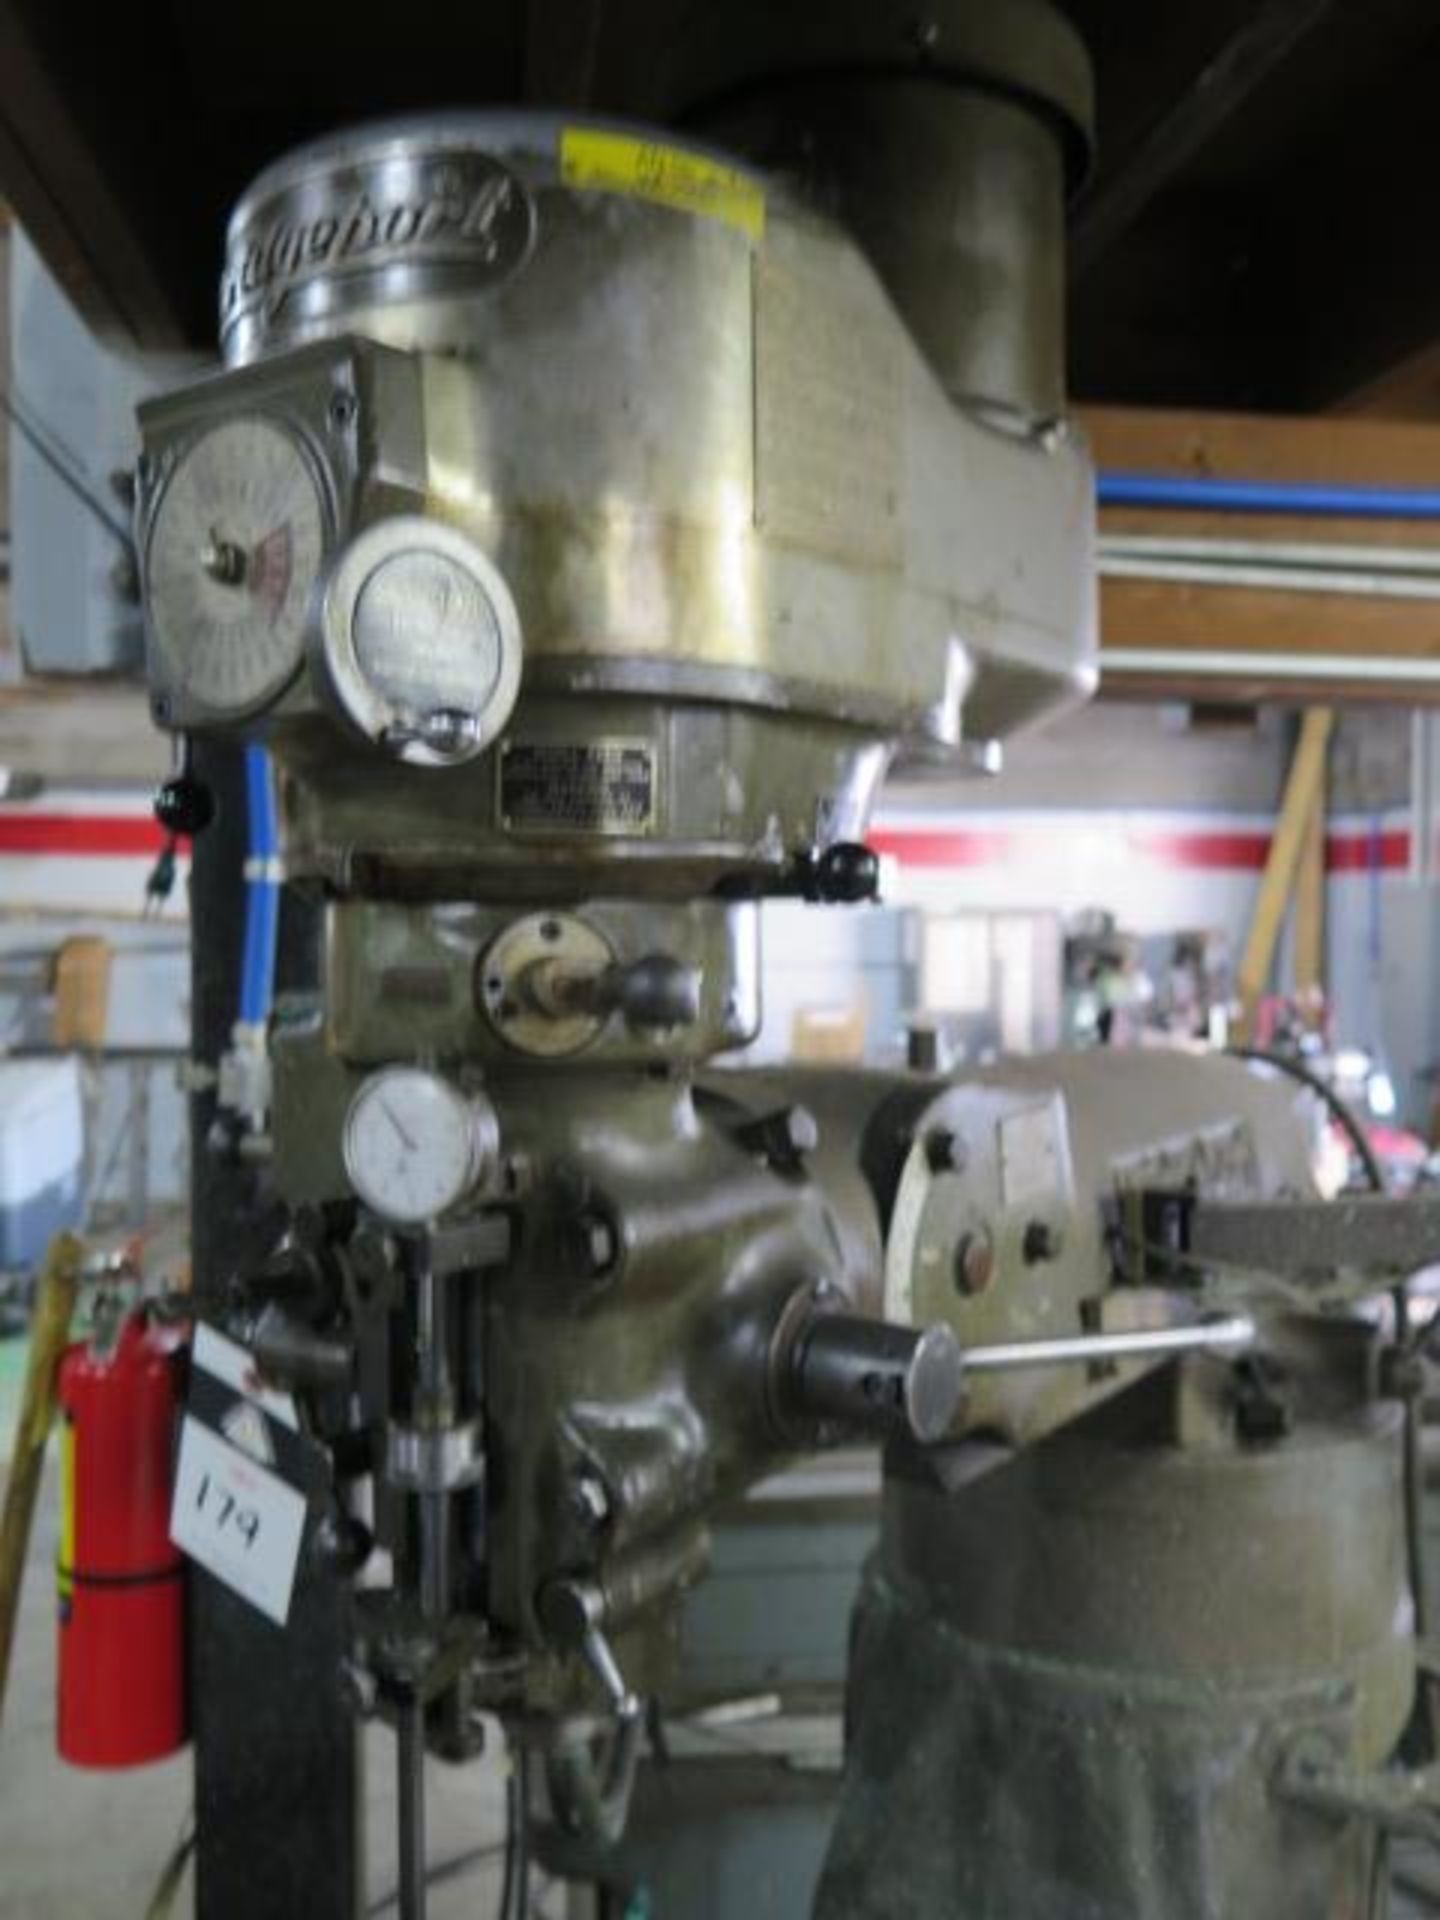 Bridgeport Vertical Mill s/n 181720 w/ Mitutoyo DRO,1.5Hp Motor, 60-4200 Dial Change RPM, SOLD AS IS - Image 4 of 10